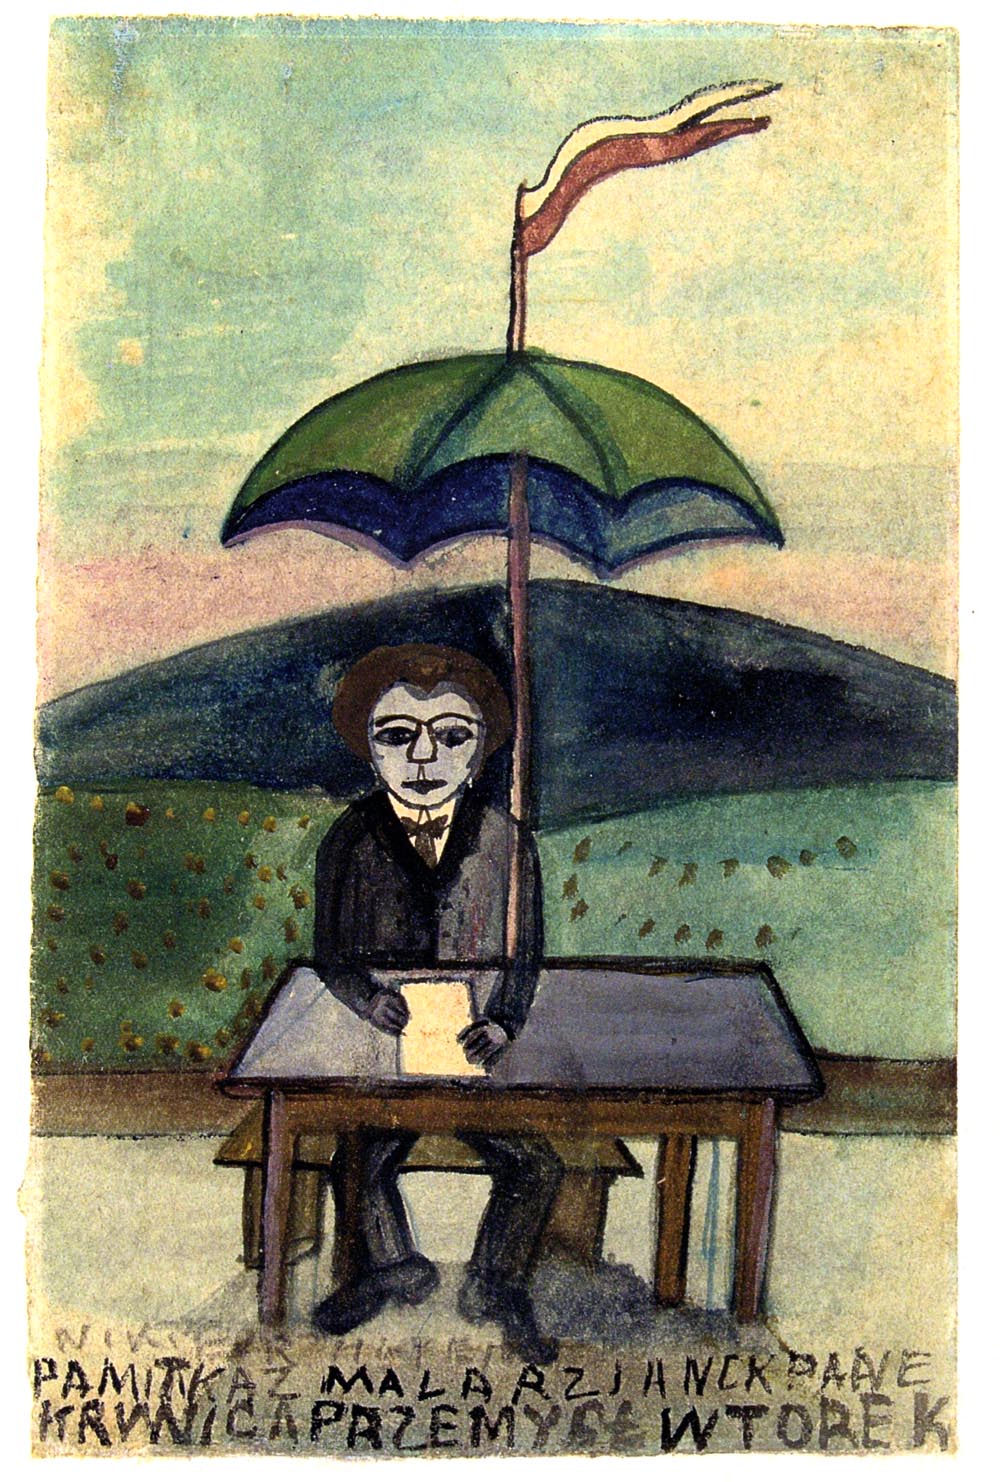 Self-Portrait Under an Umbrella